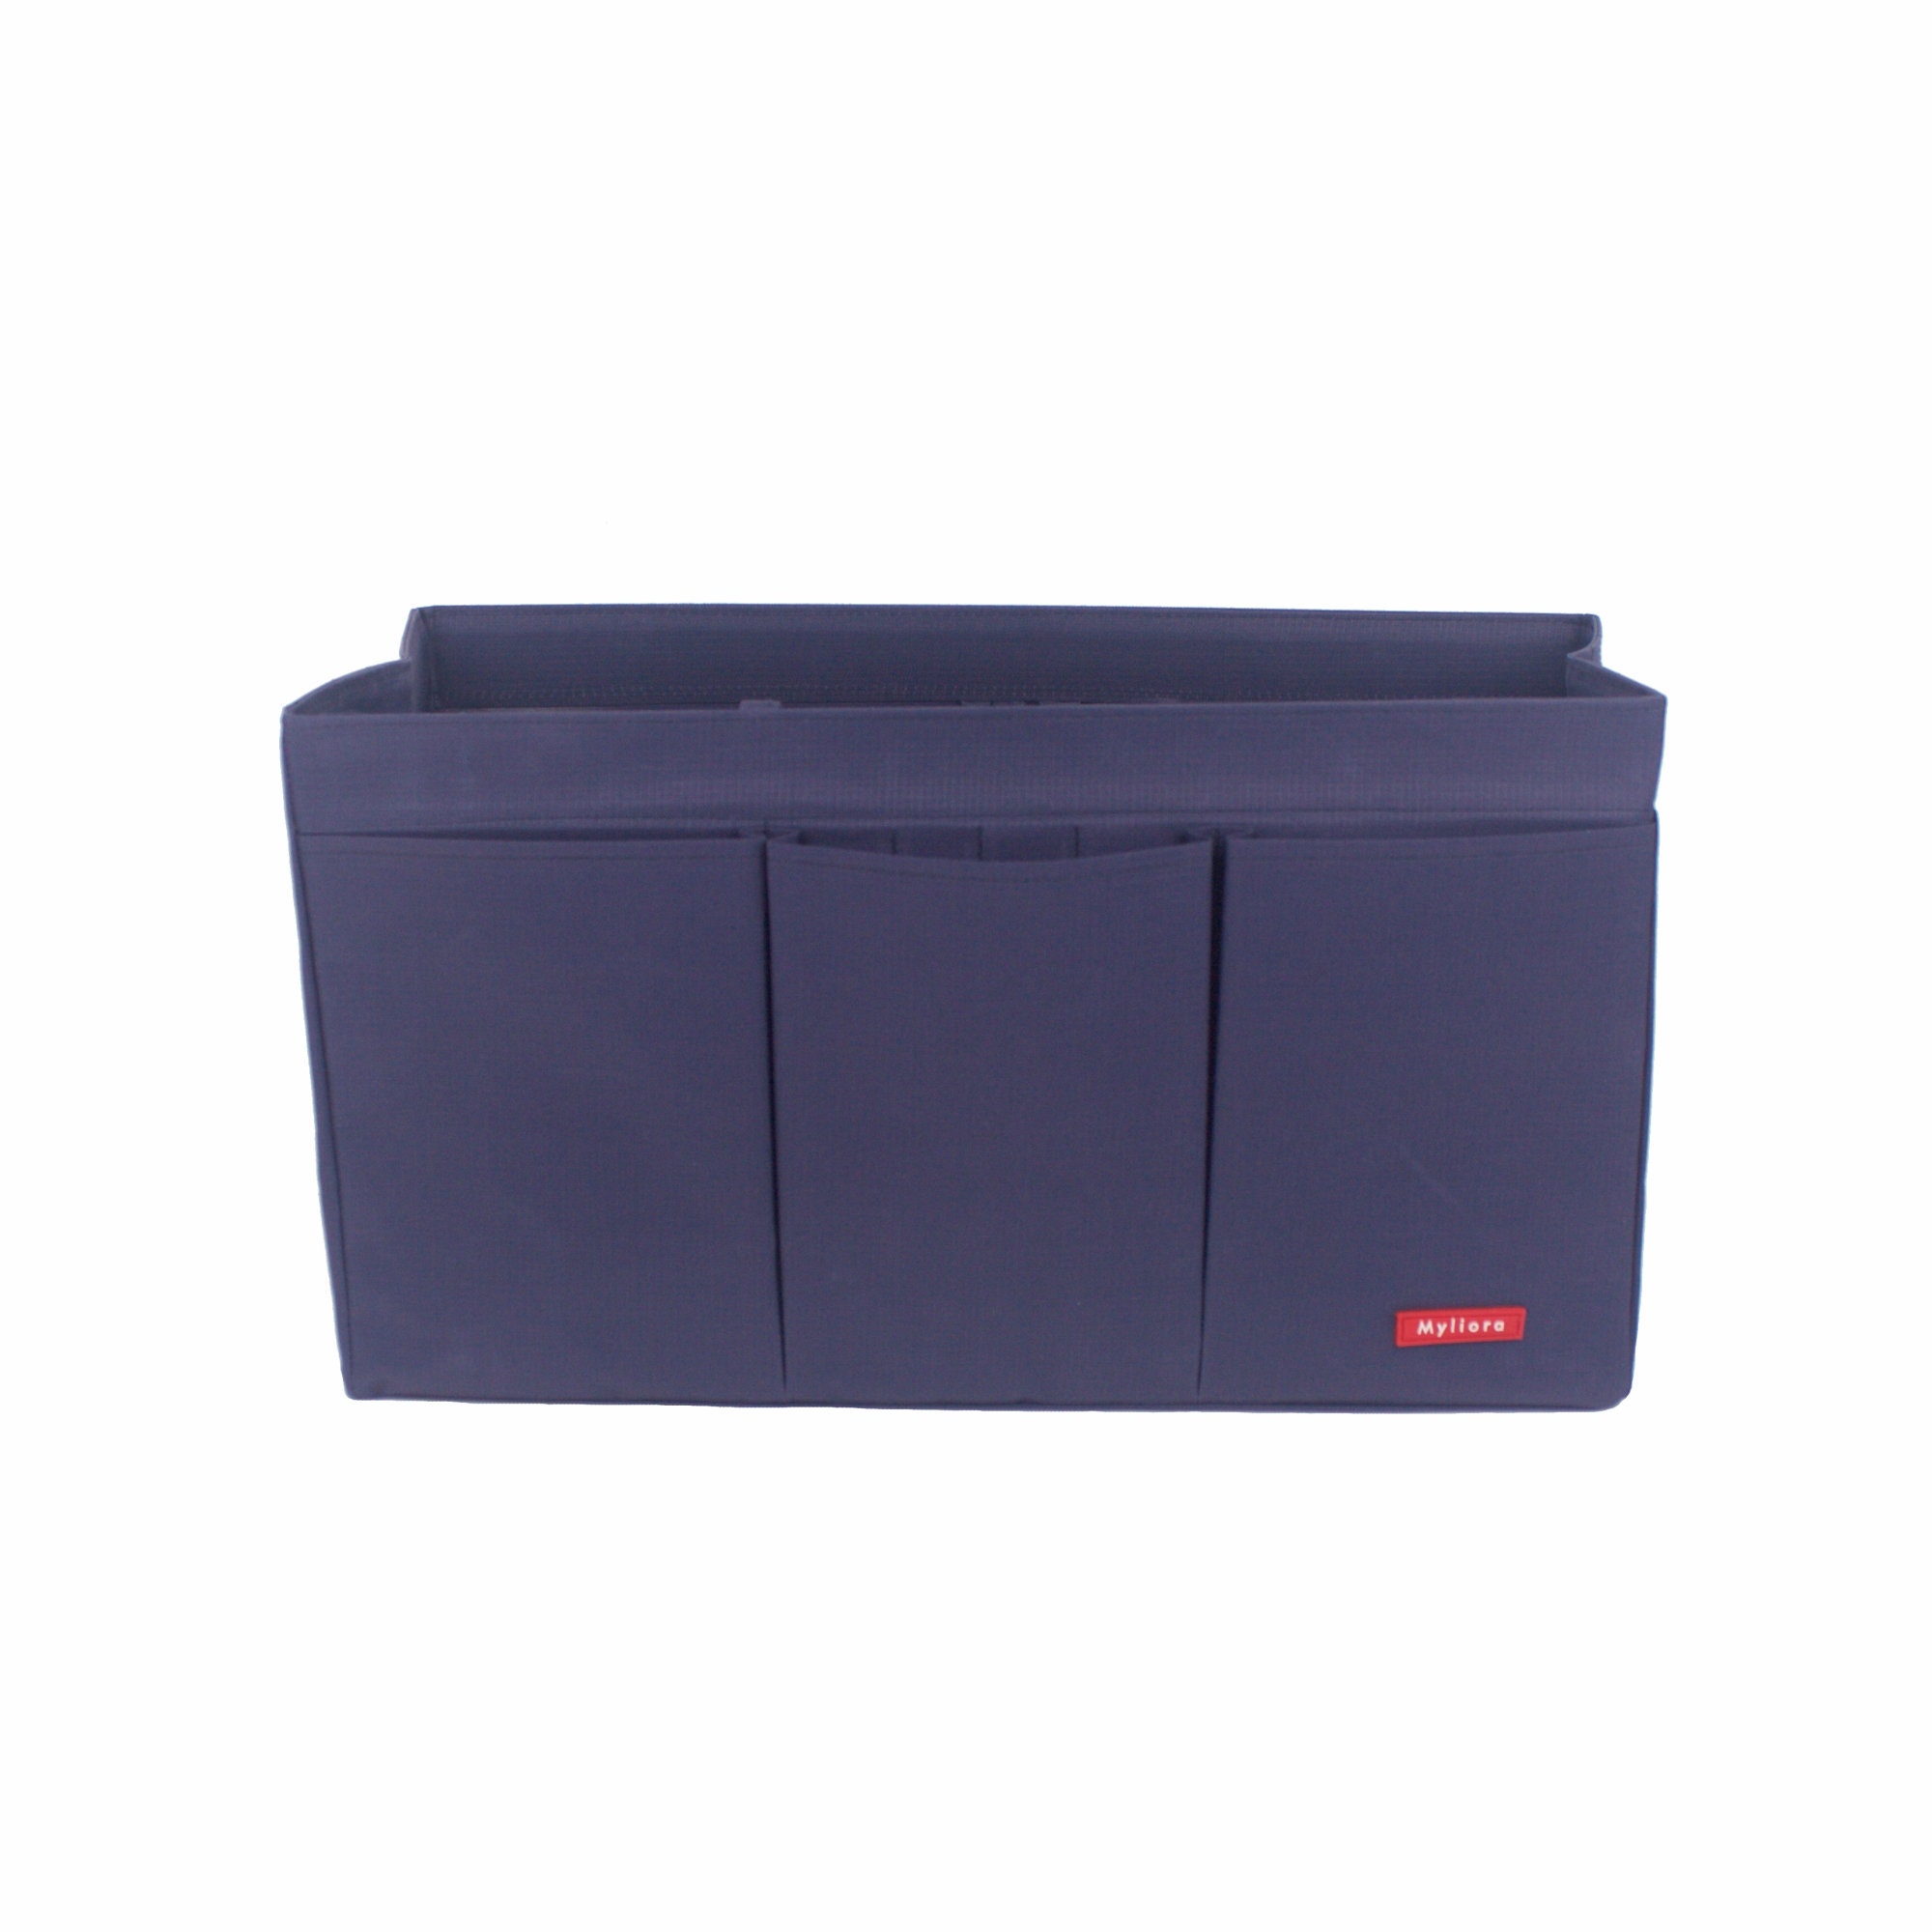 Premium Quality - Waterproof Bag Organiser for Speedy 30 - Myliora